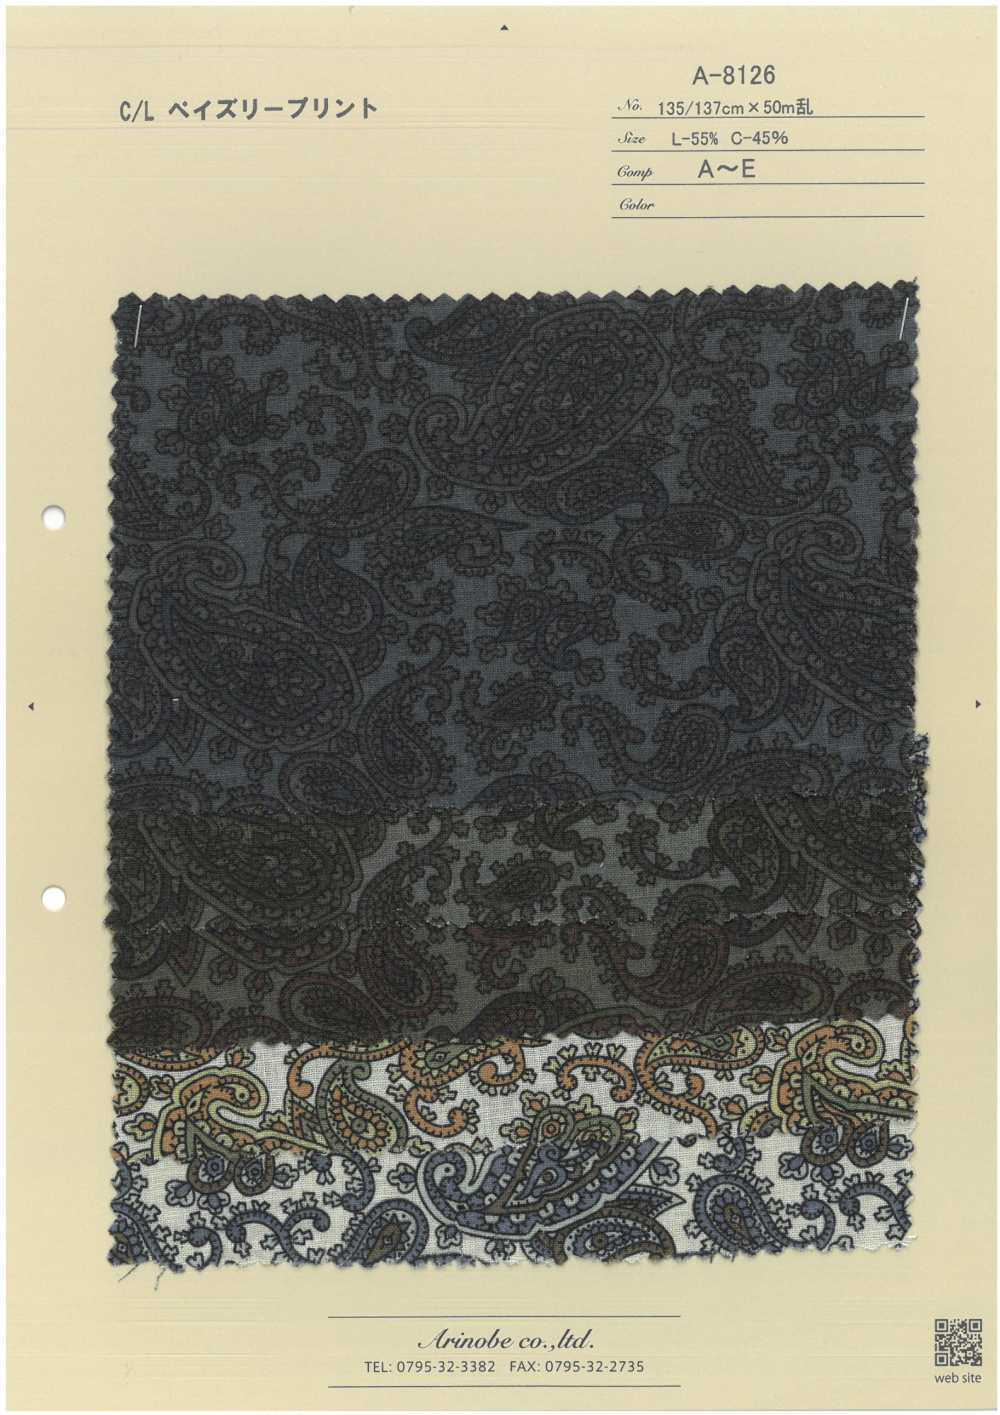 A-8126 C/L Paisley Print[Textile / Fabric] ARINOBE CO., LTD.